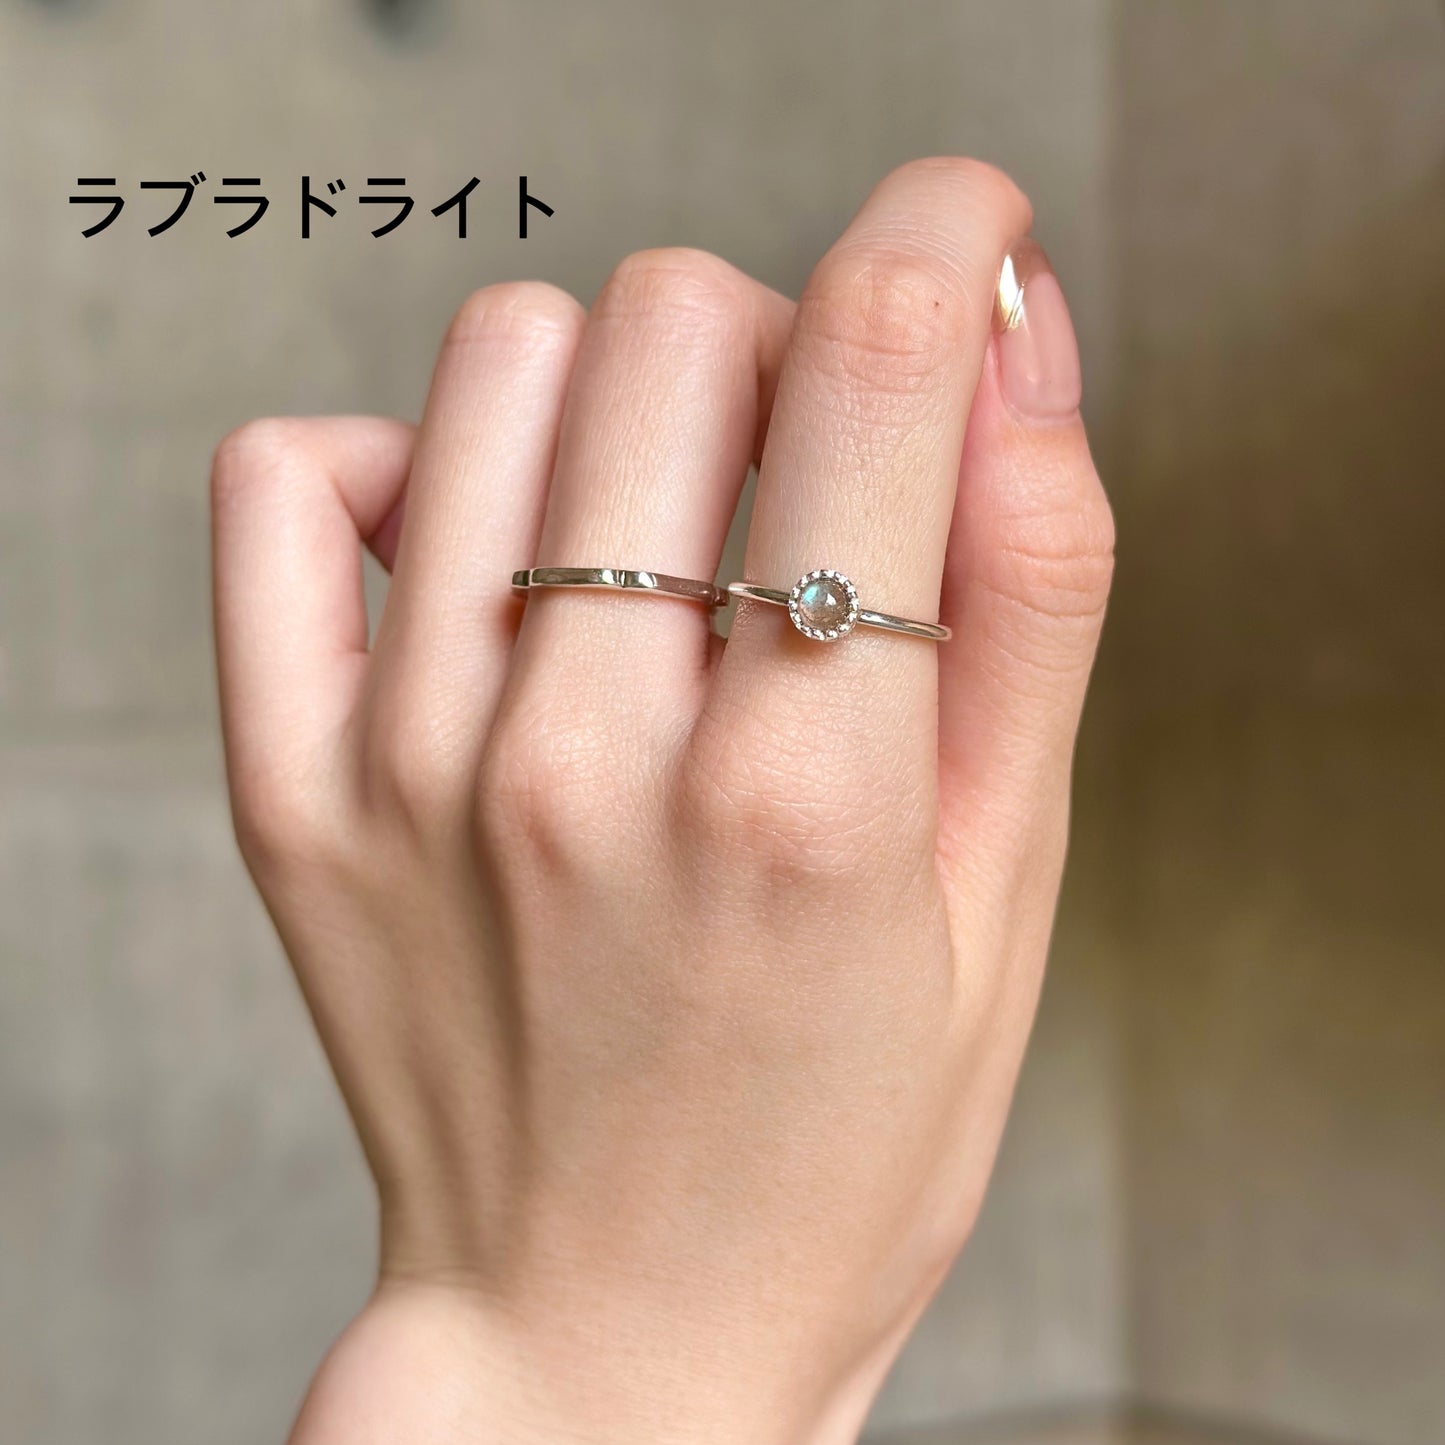 Silver925 petit ring 1